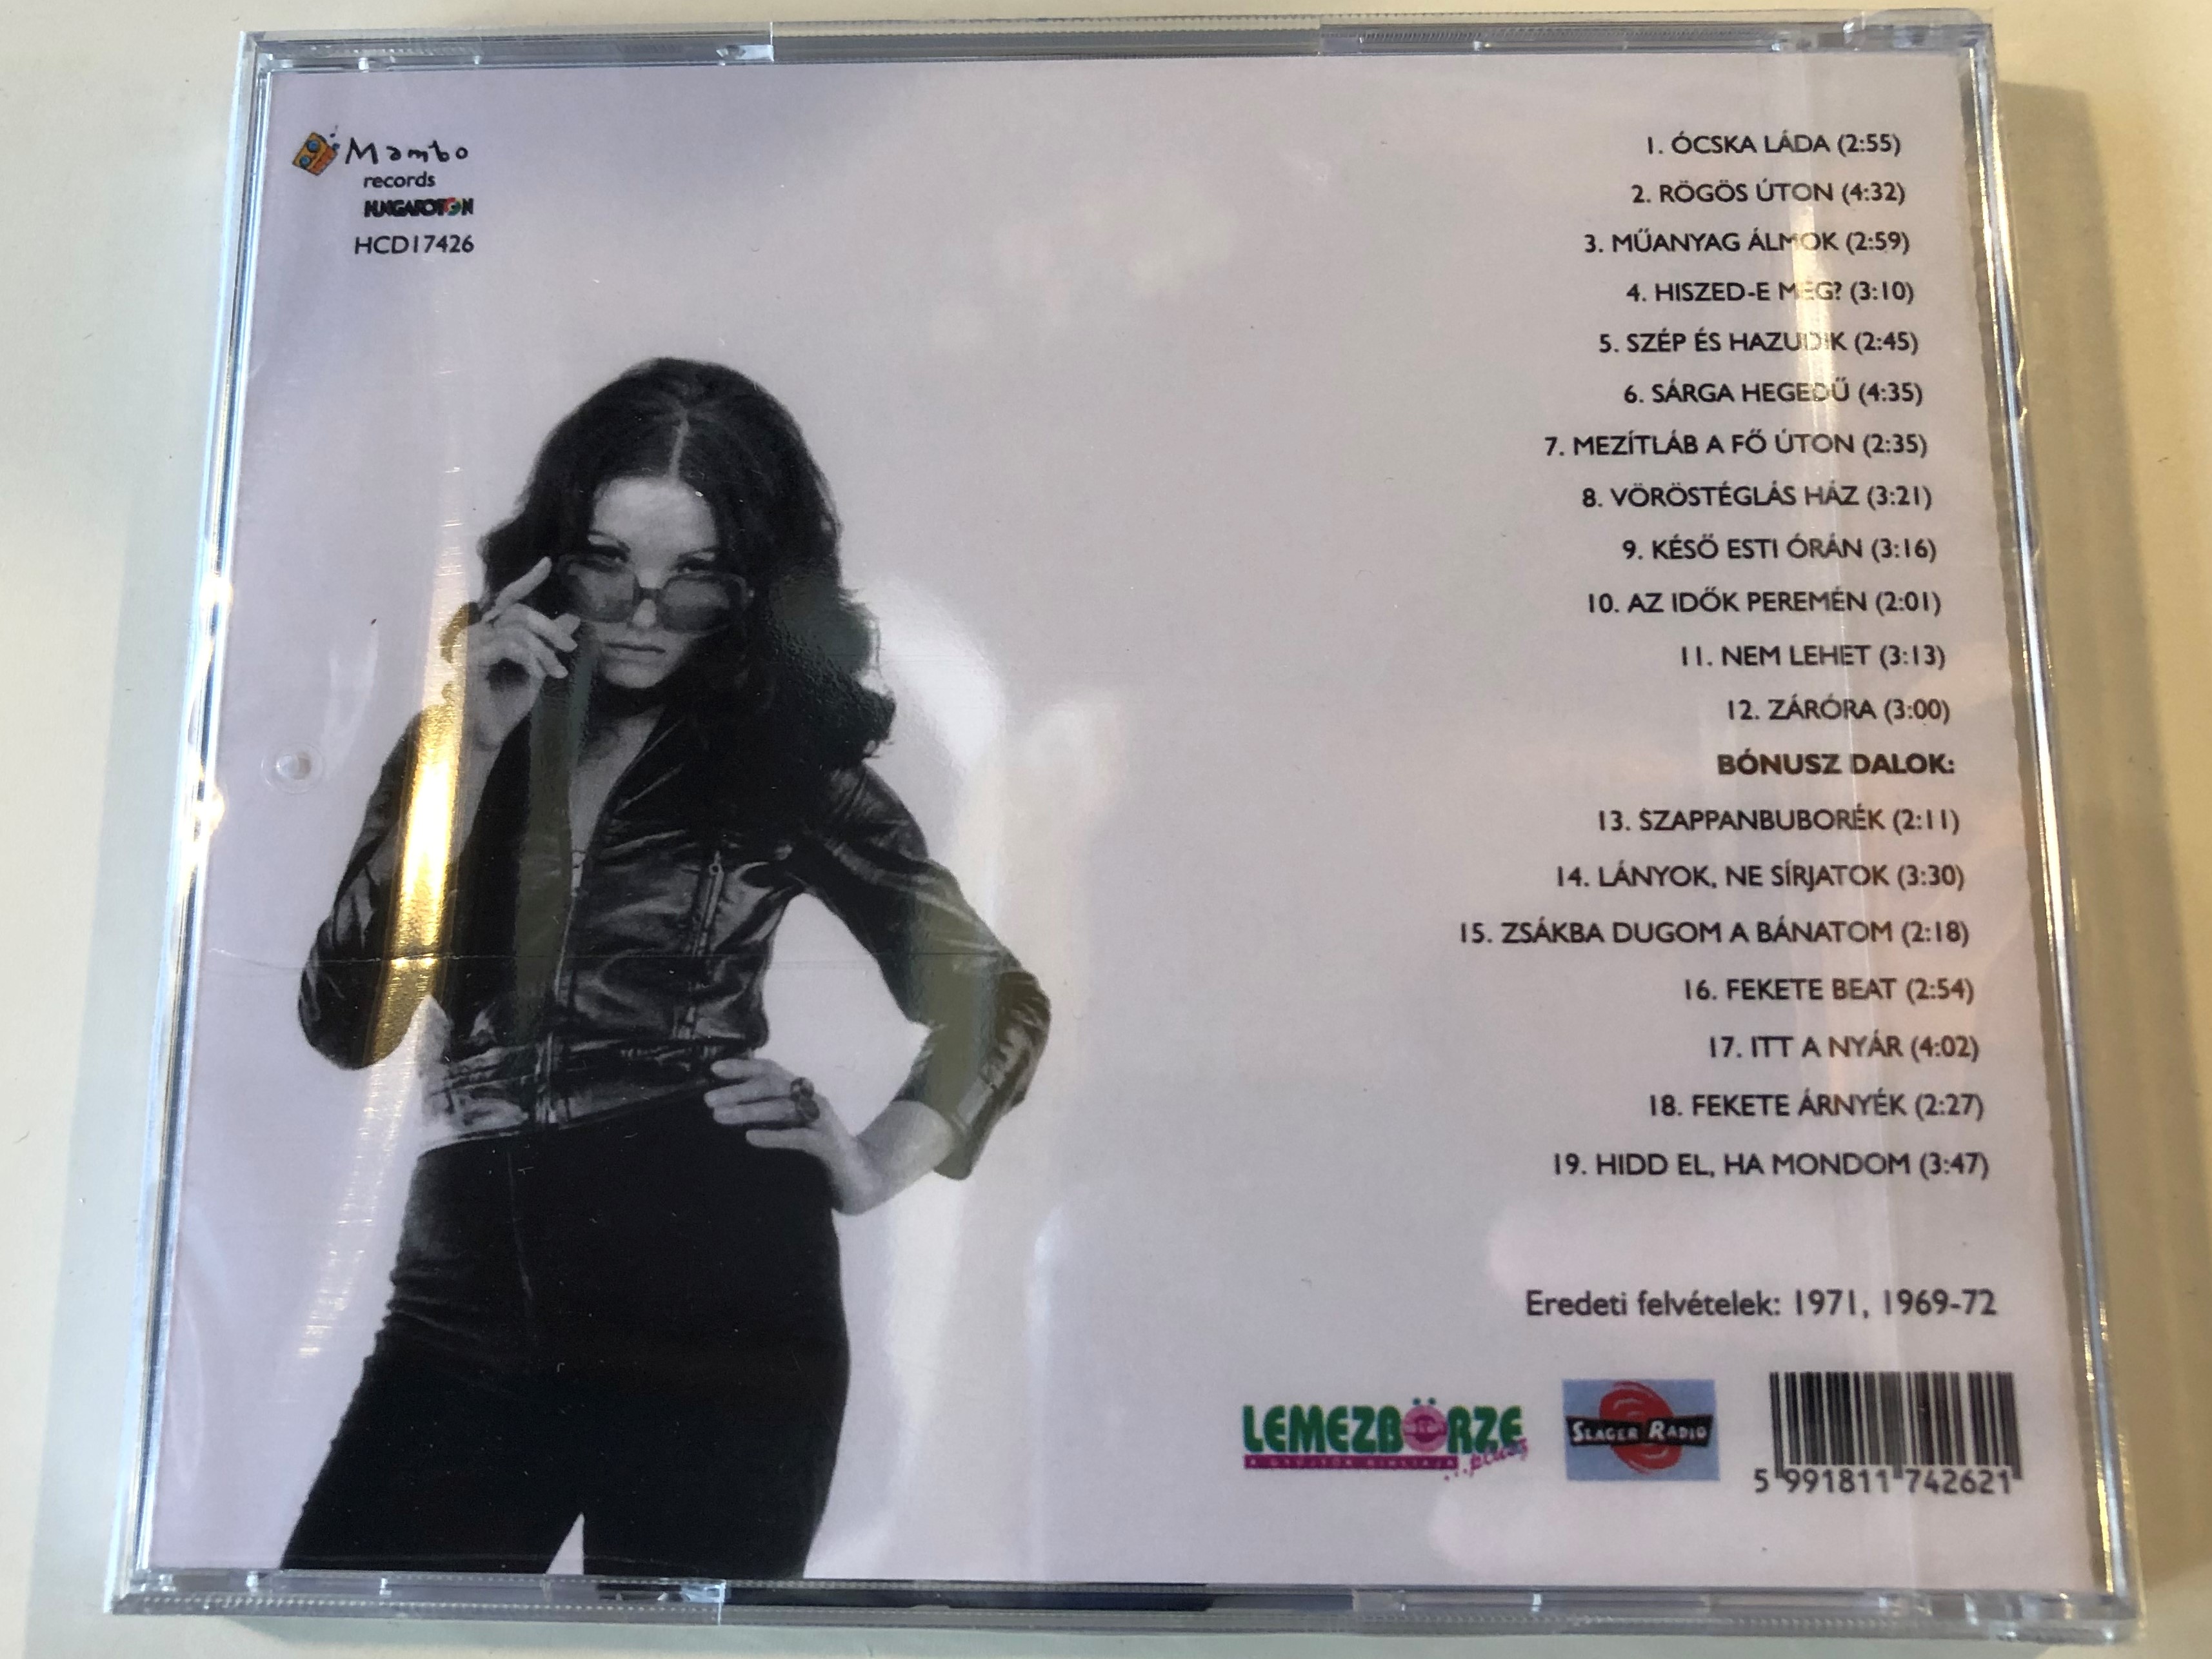 zalatnay-mambo-records-audio-cd-hcd17426-2-.jpg